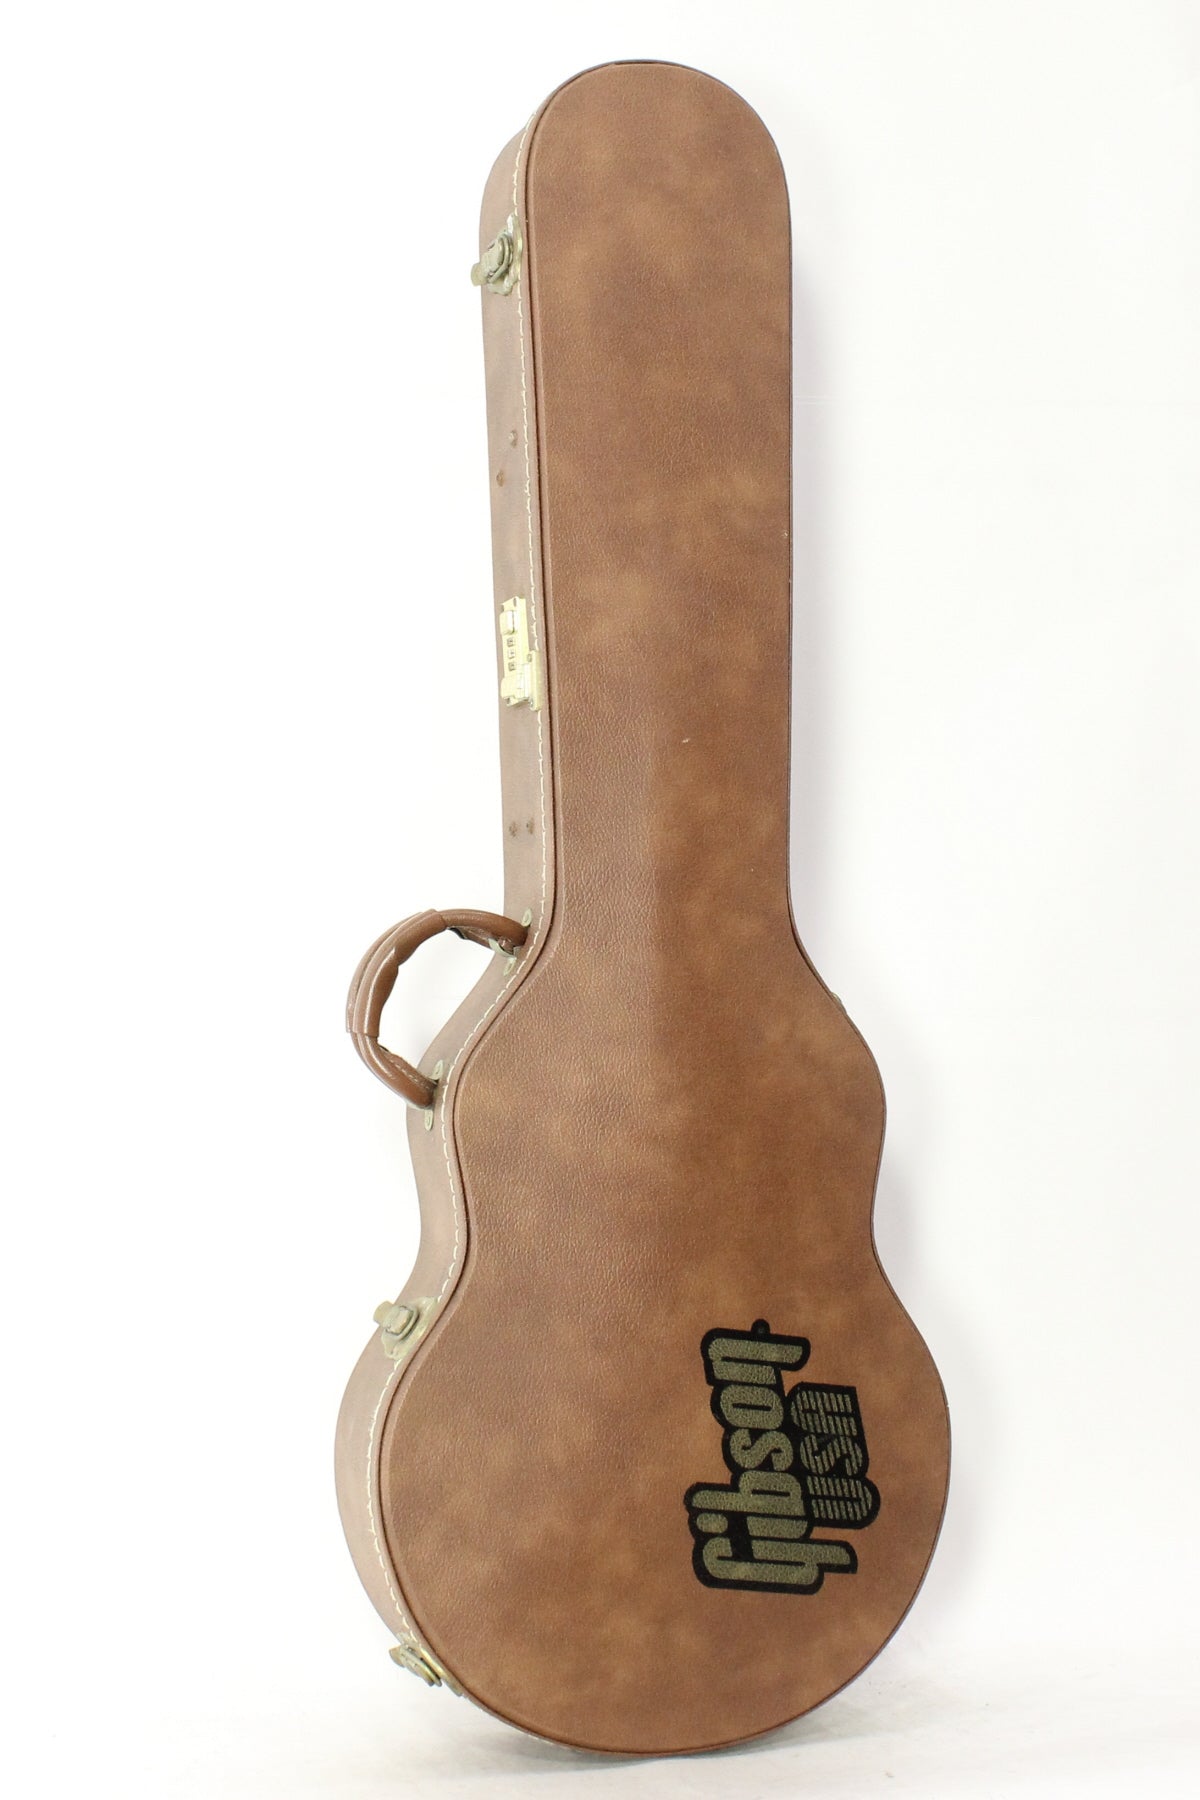 [SN 00400471] USED Gibson / Les Paul Studio Ebony 2000 [09]